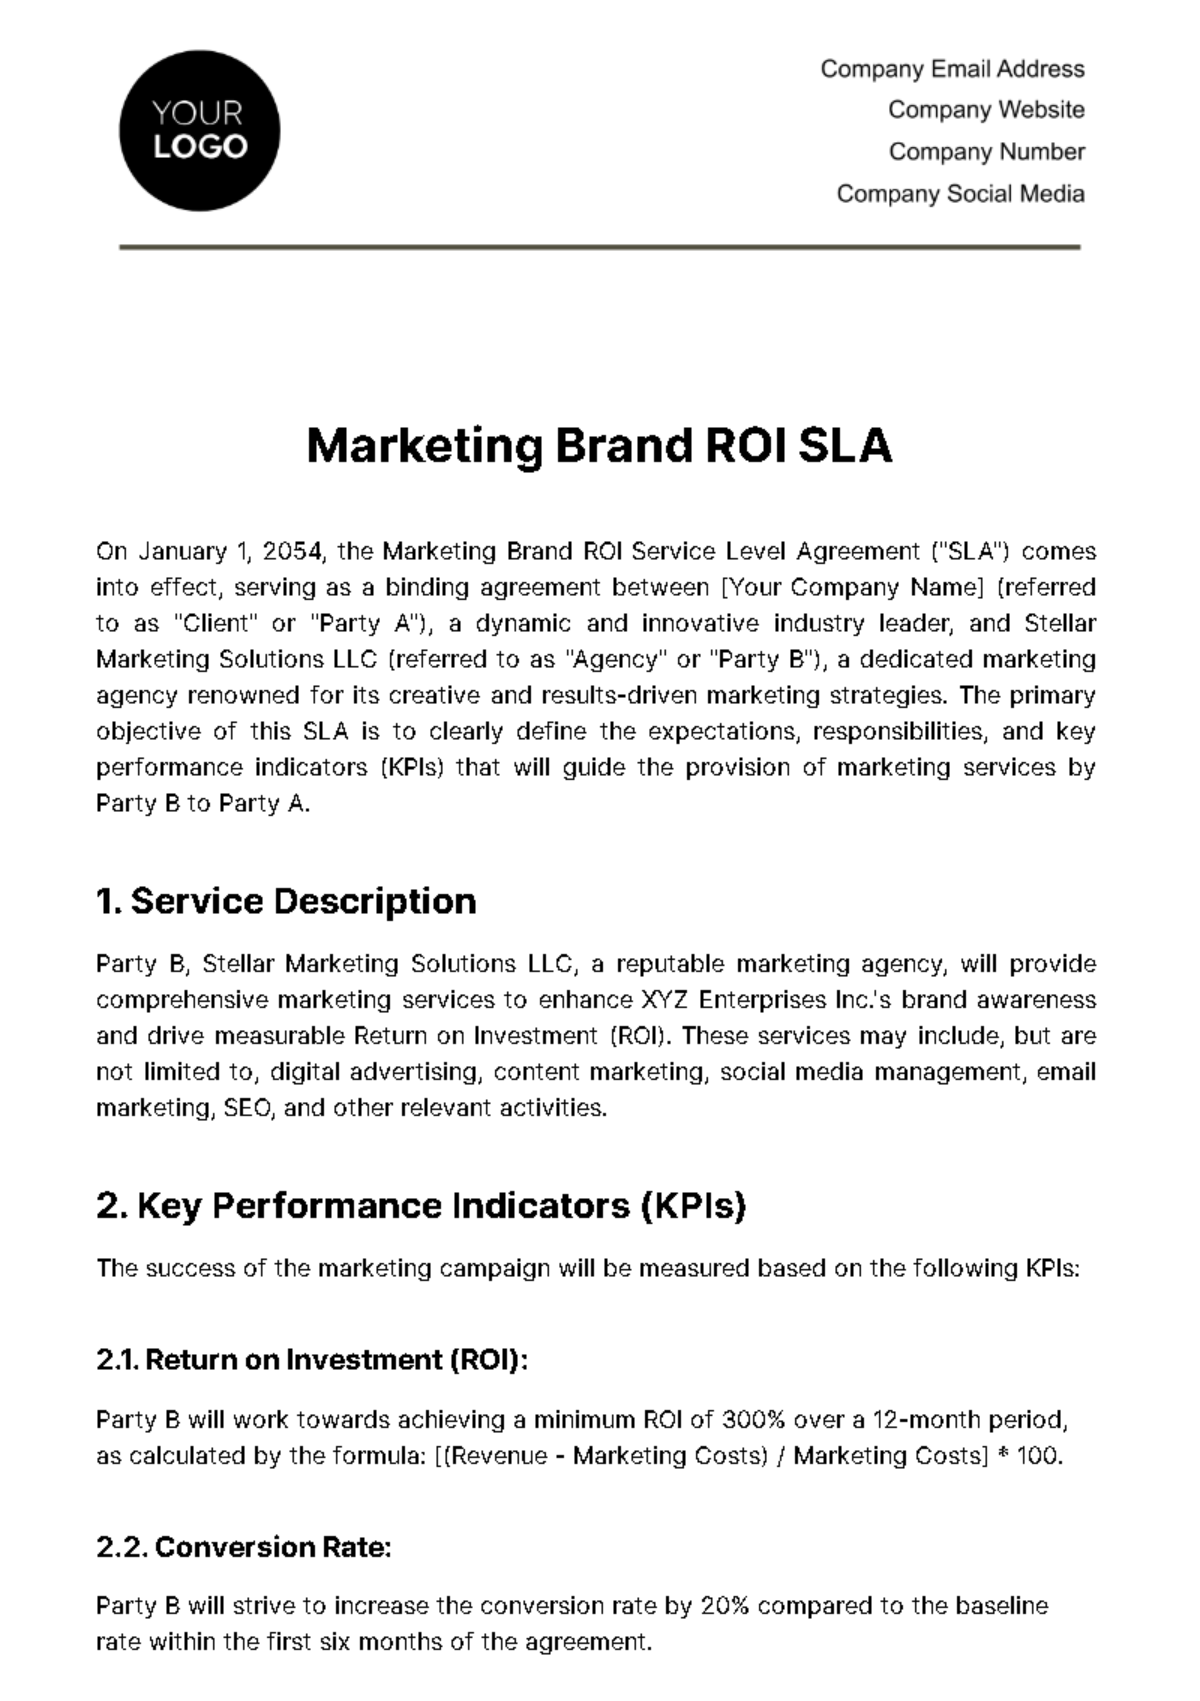 Marketing Brand ROI SLA Template